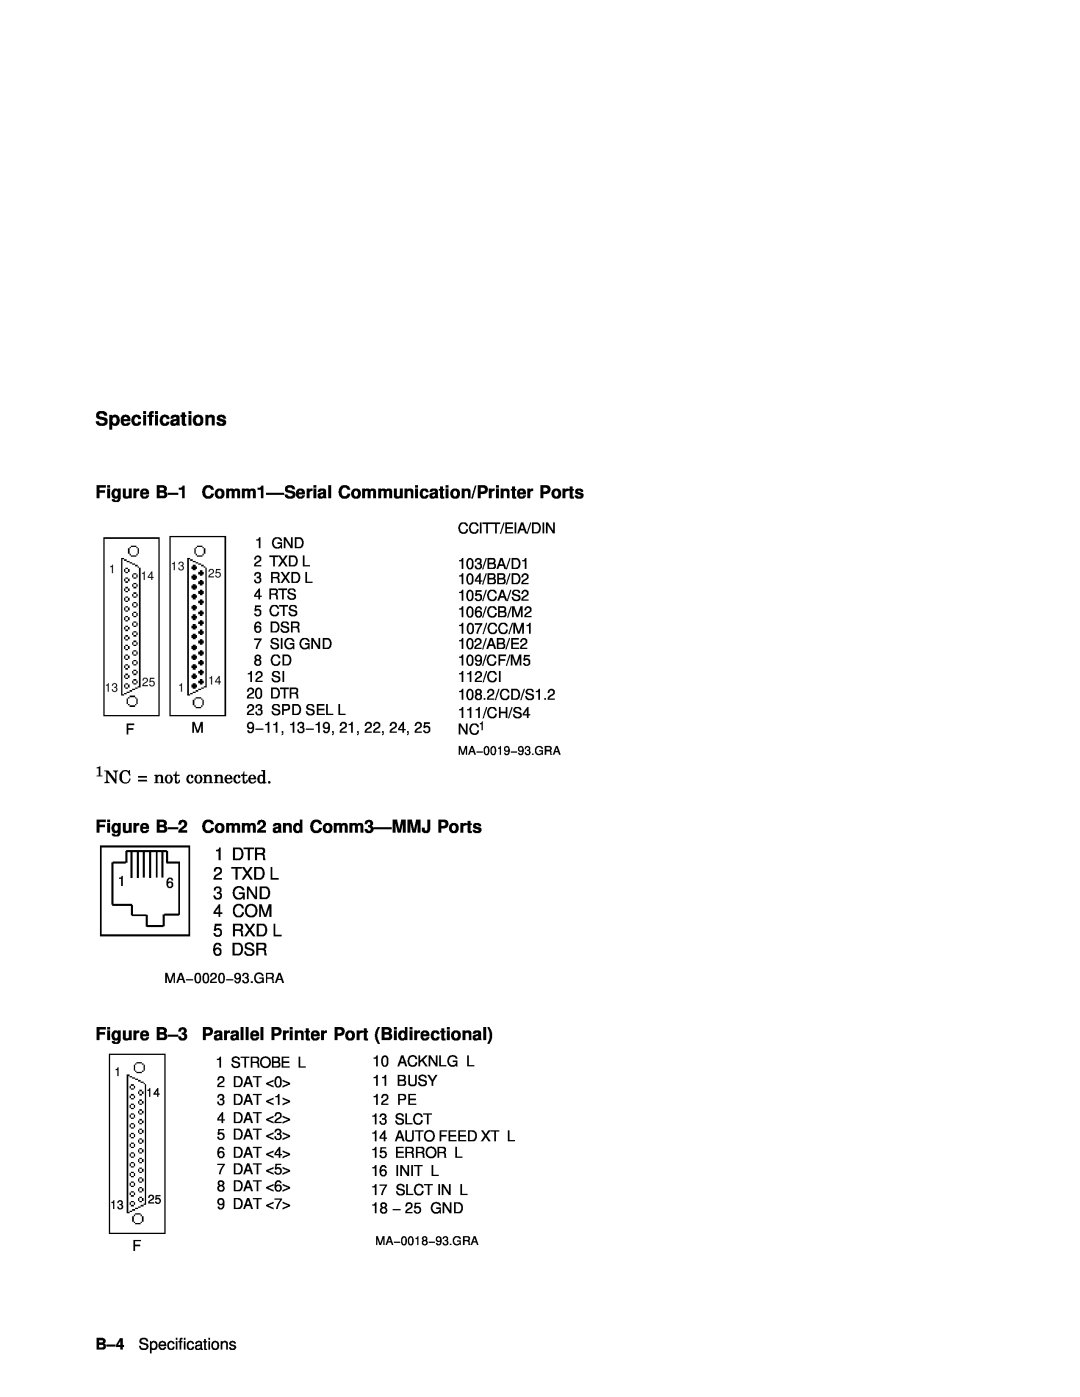 IBM WS525 manual Figure B-1 Comm1-Serial Communication/Printer Ports, Figure B-2 Comm2 and Comm3-MMJ Ports, Speciﬁcations 